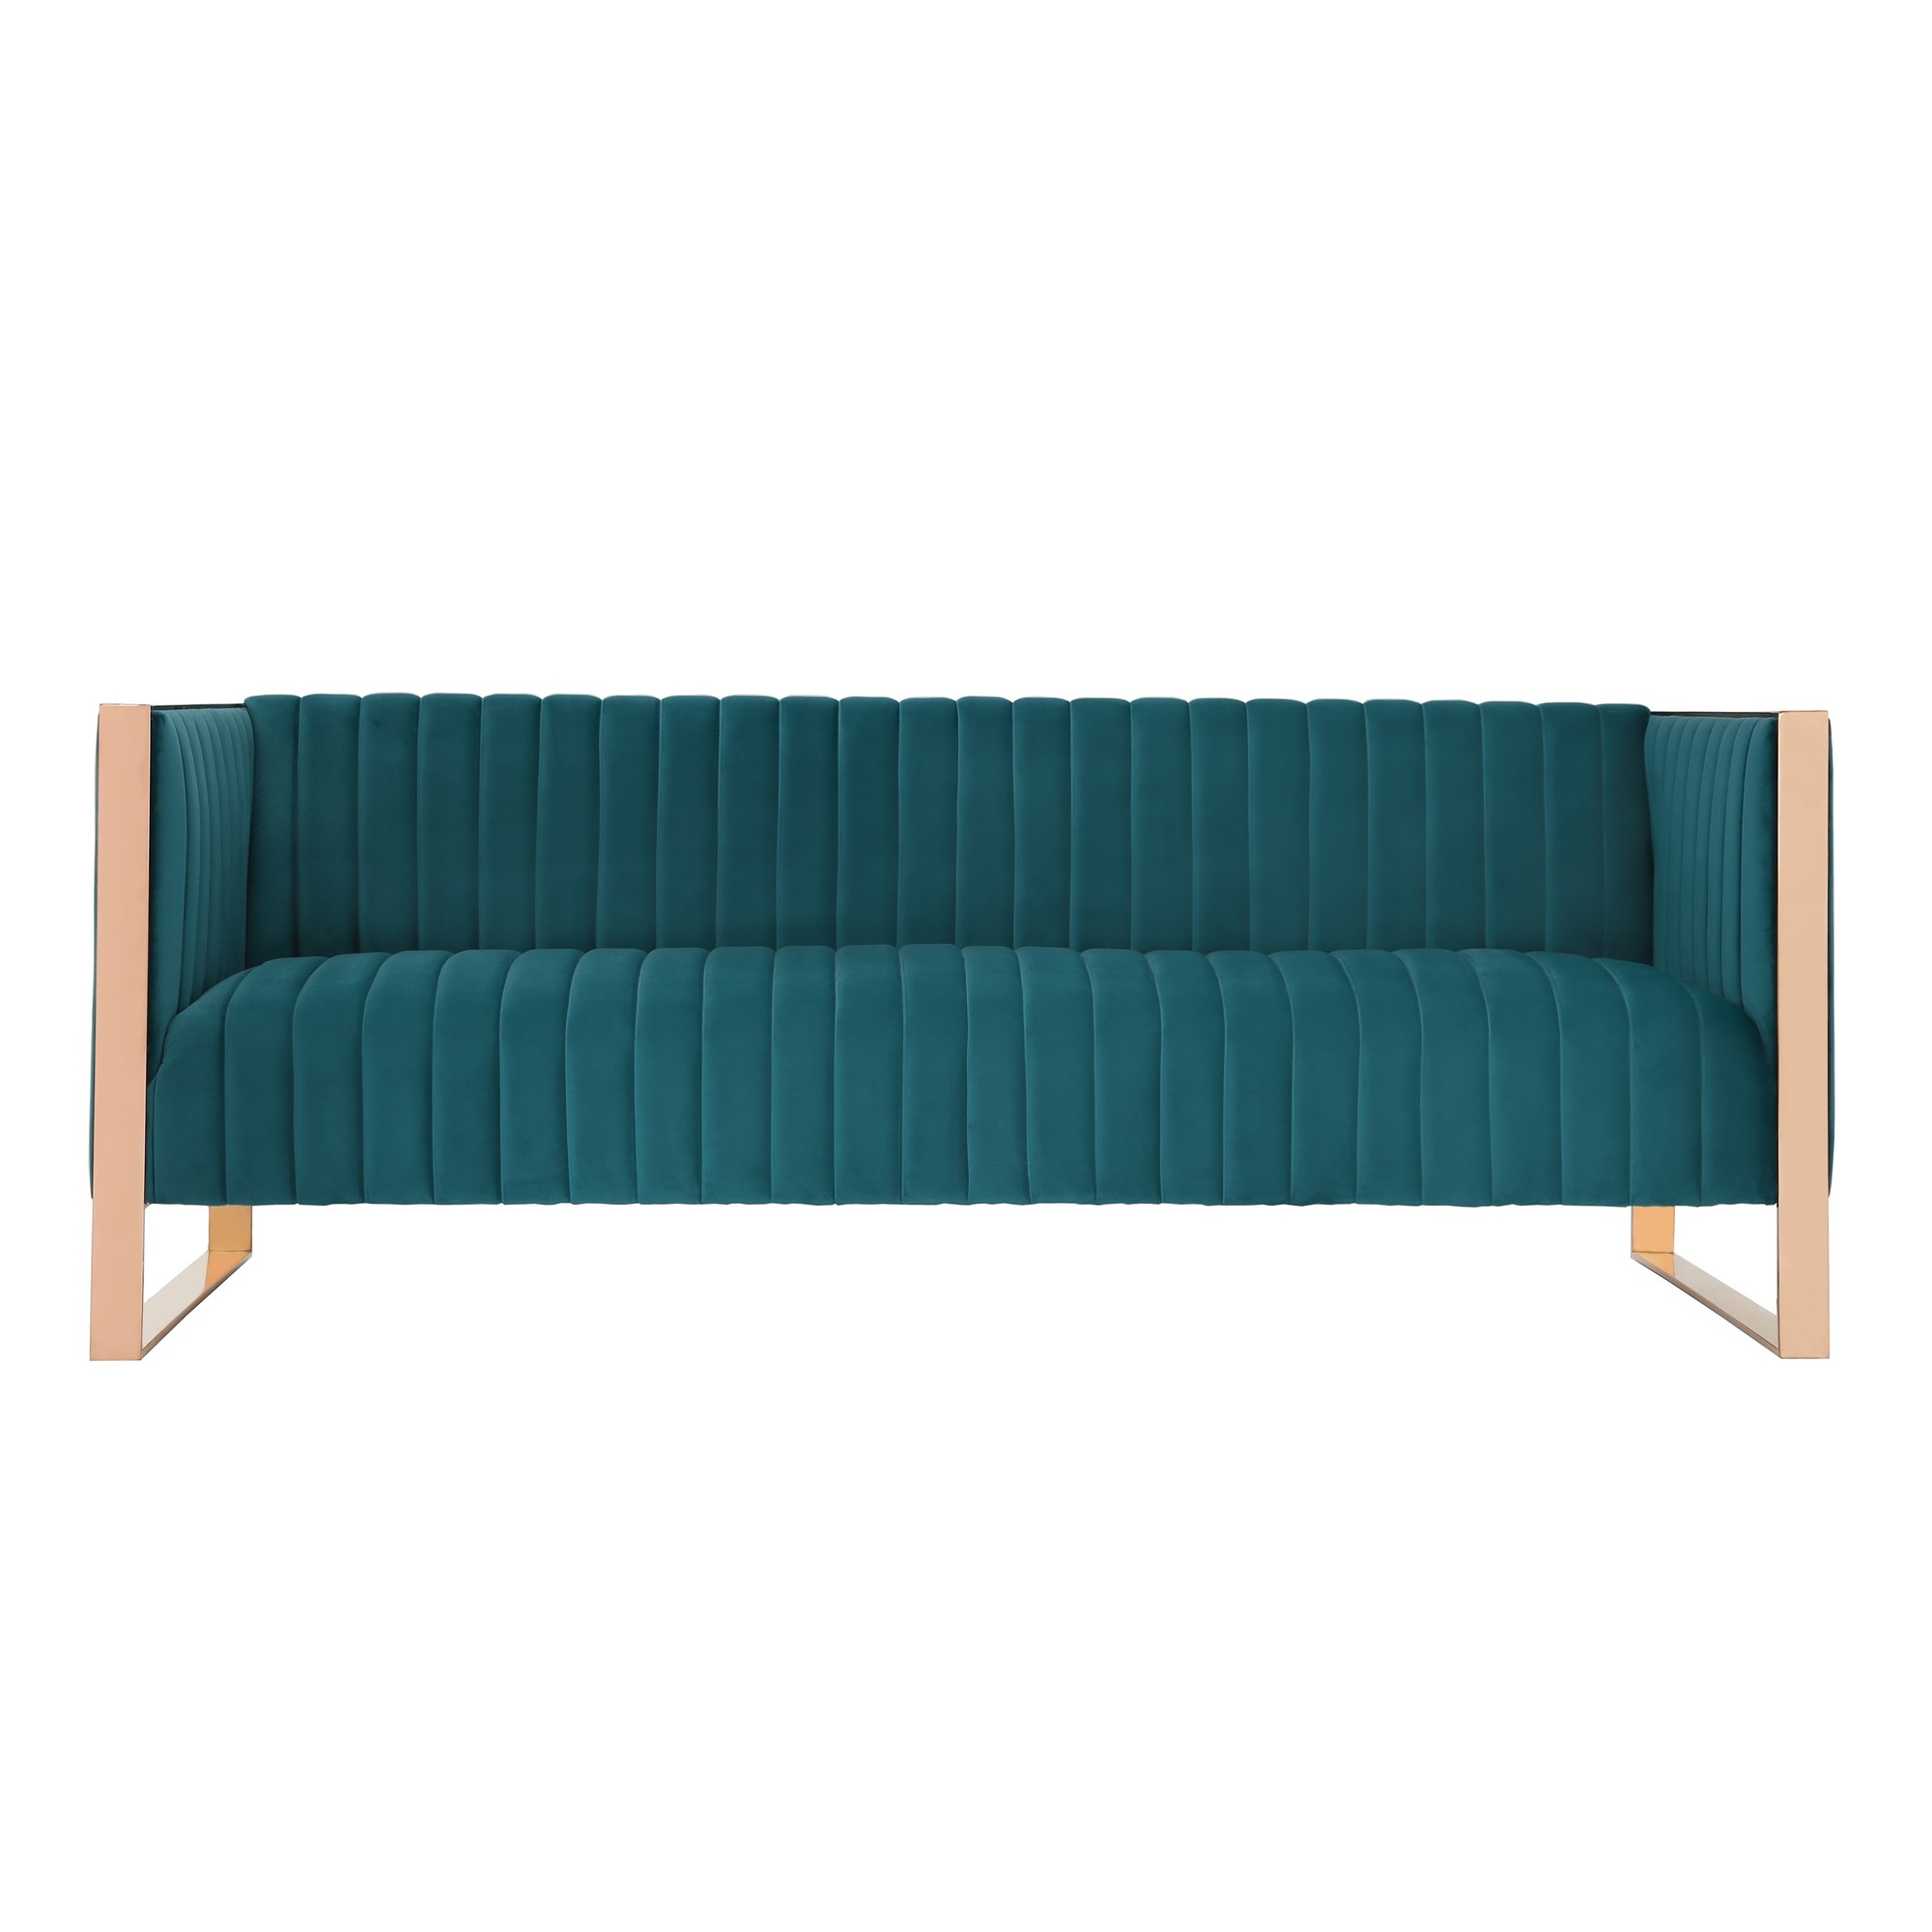 Manhattan Comfort, Trillium 83.07Inch Aqua Blue and Gold 3-Seat Sofa, Primary Color Aqua, Included (qty.) 1 Model SF009